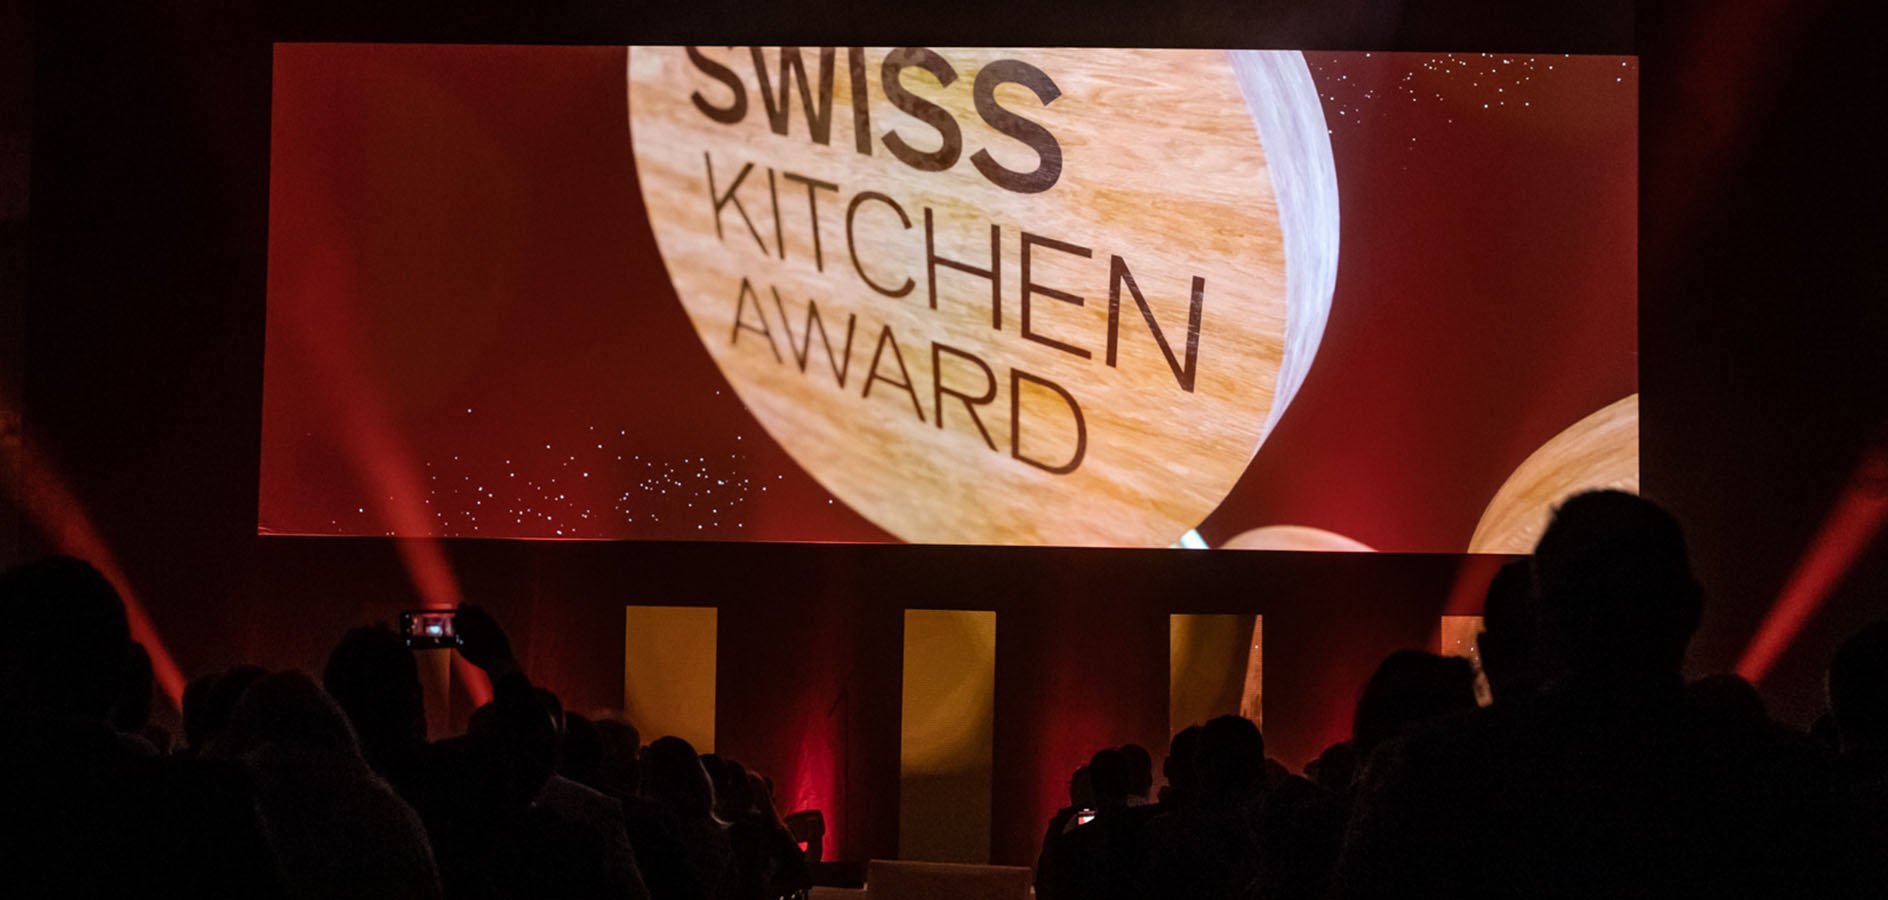 Swiss Kitchen Award